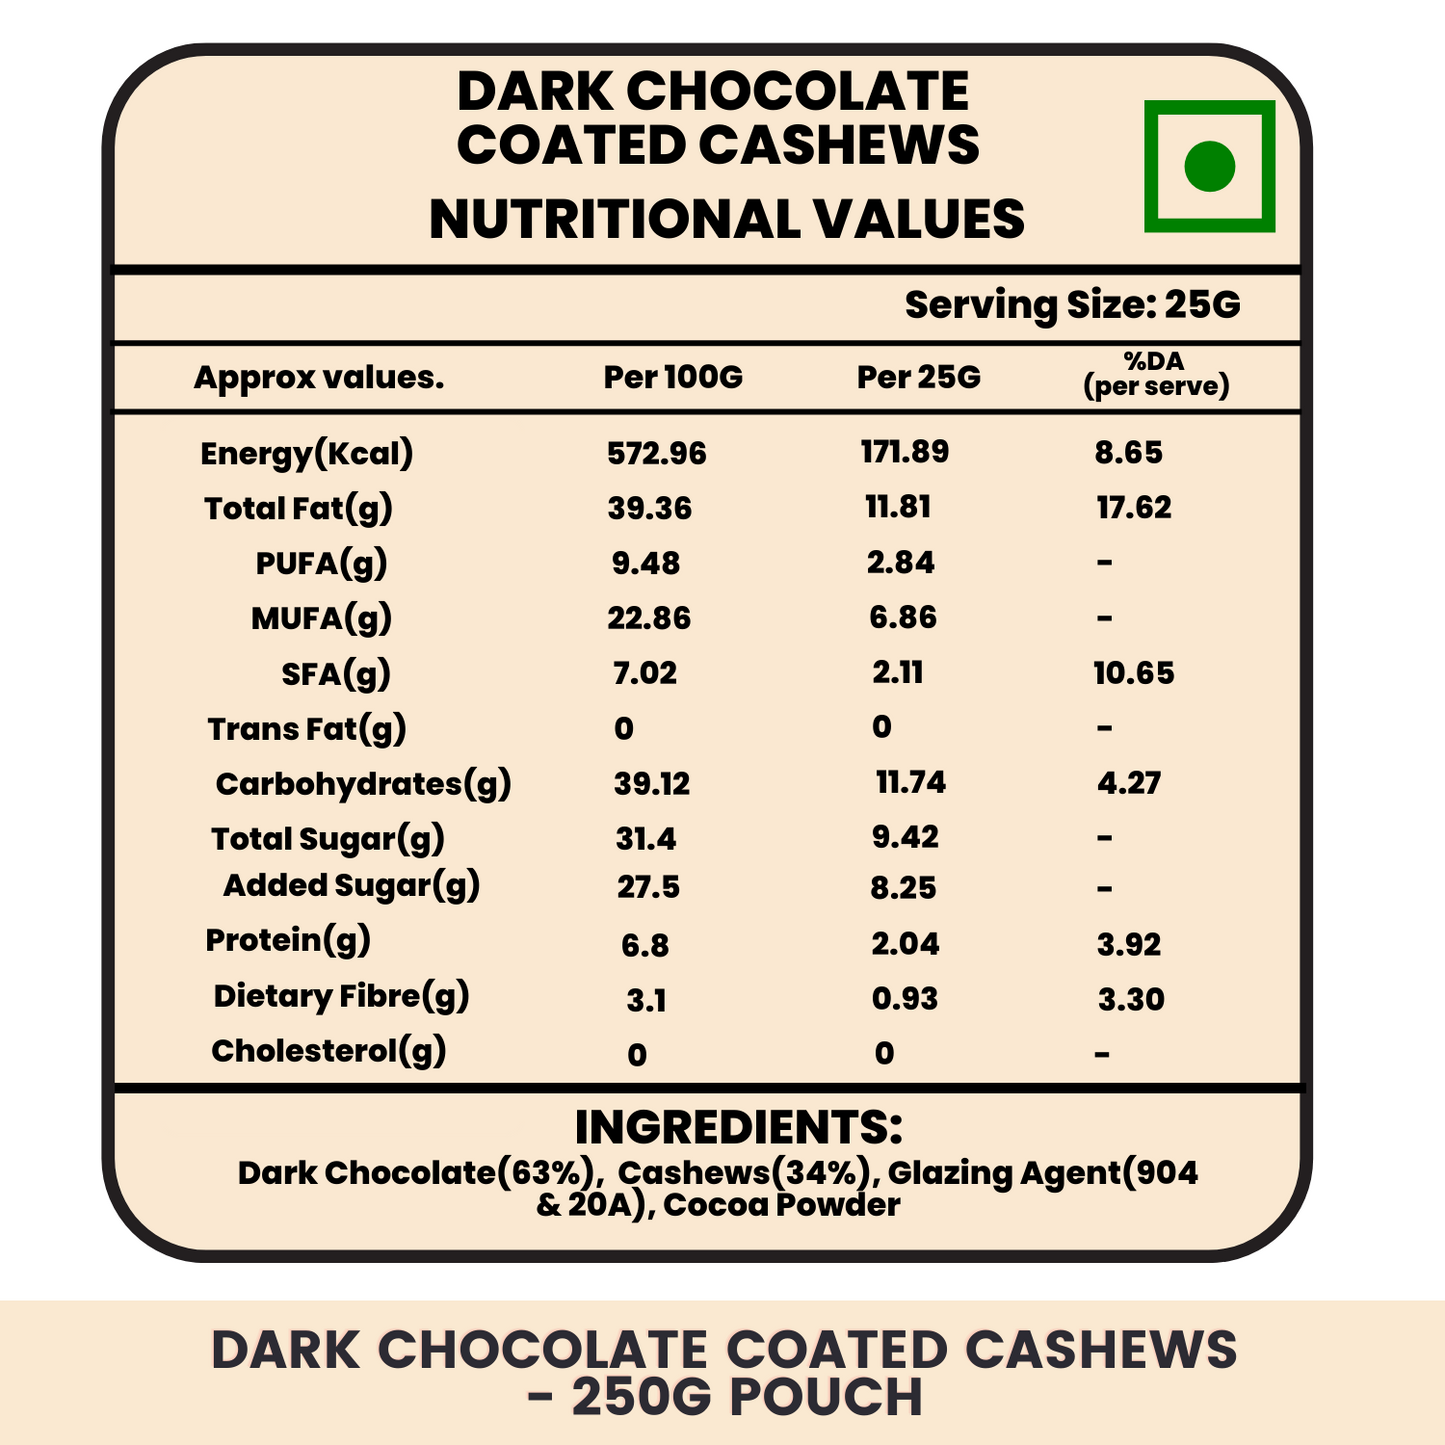 Dark Chocolate Coated Cashews - Premium Cashews coated in Dark Chocolate - 250g Pouch